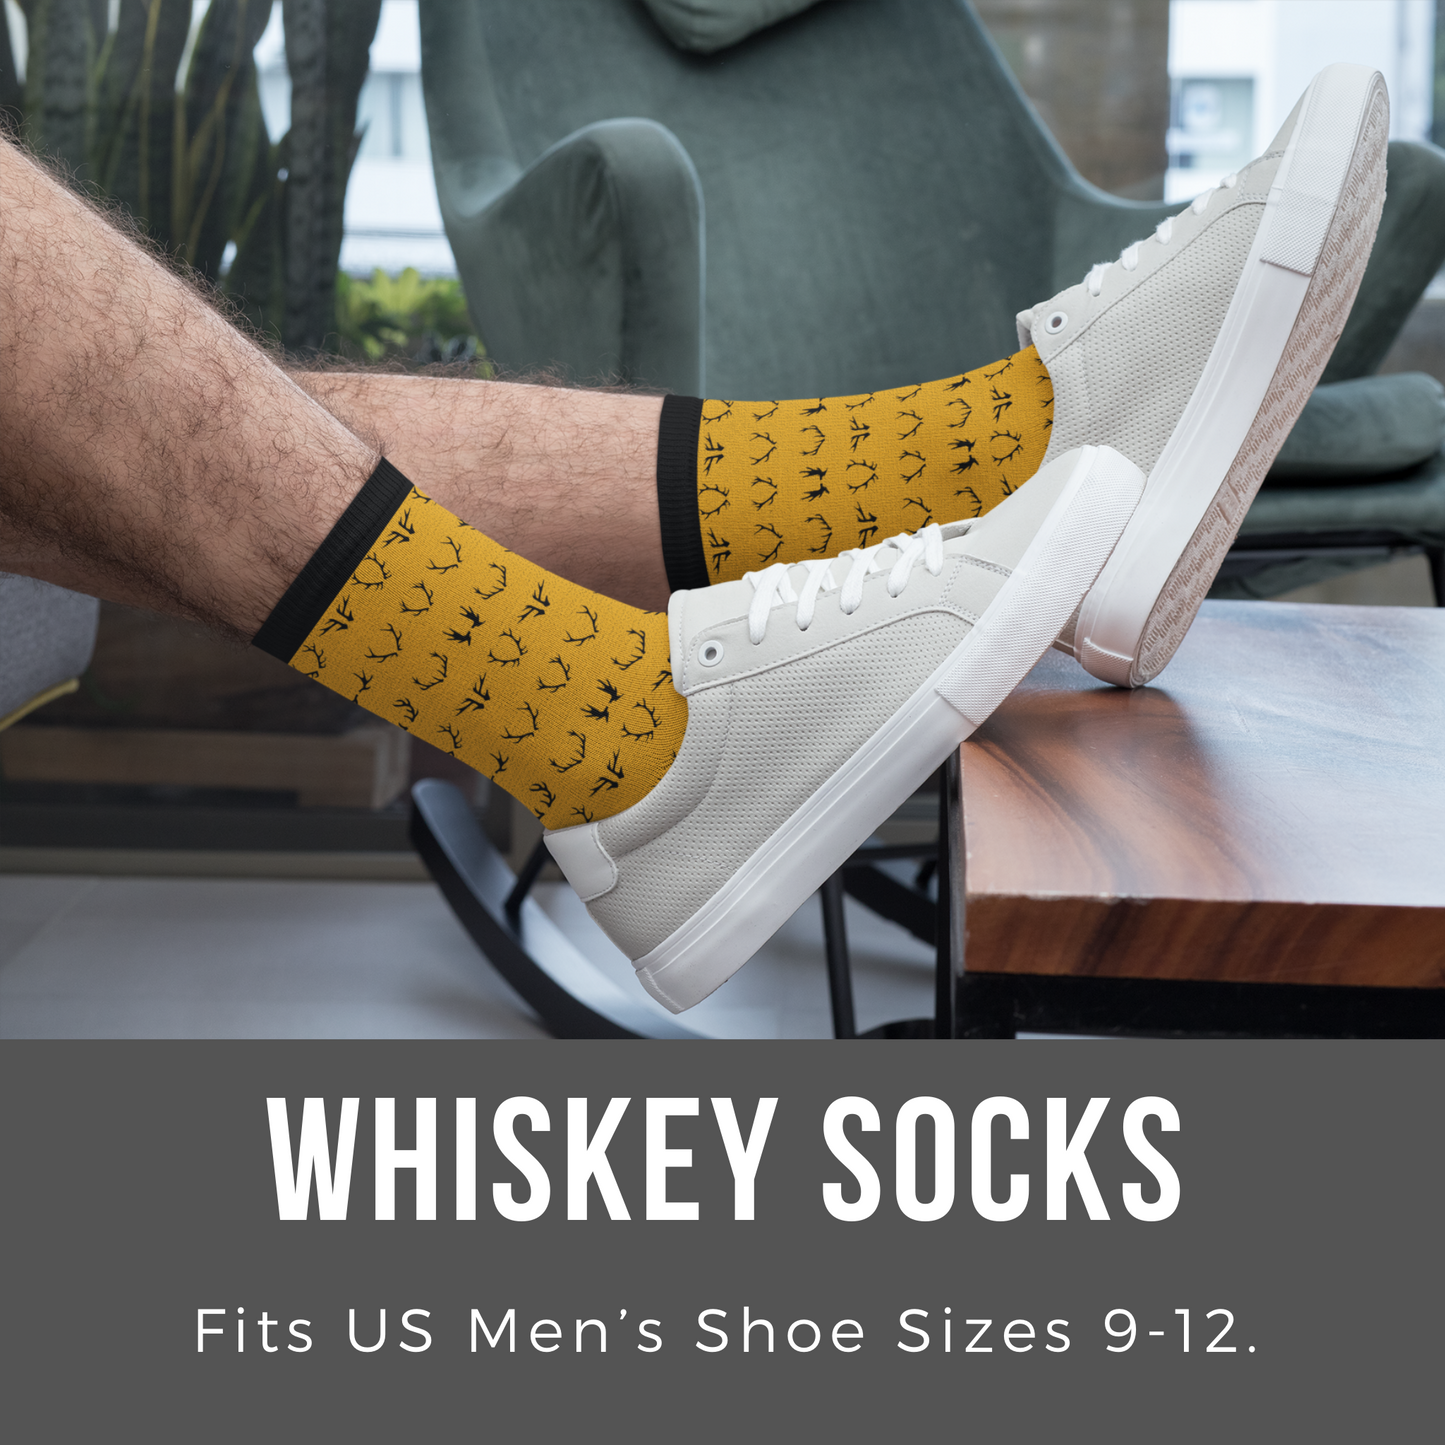 3 Pairs of Whisky Socks Gift Set